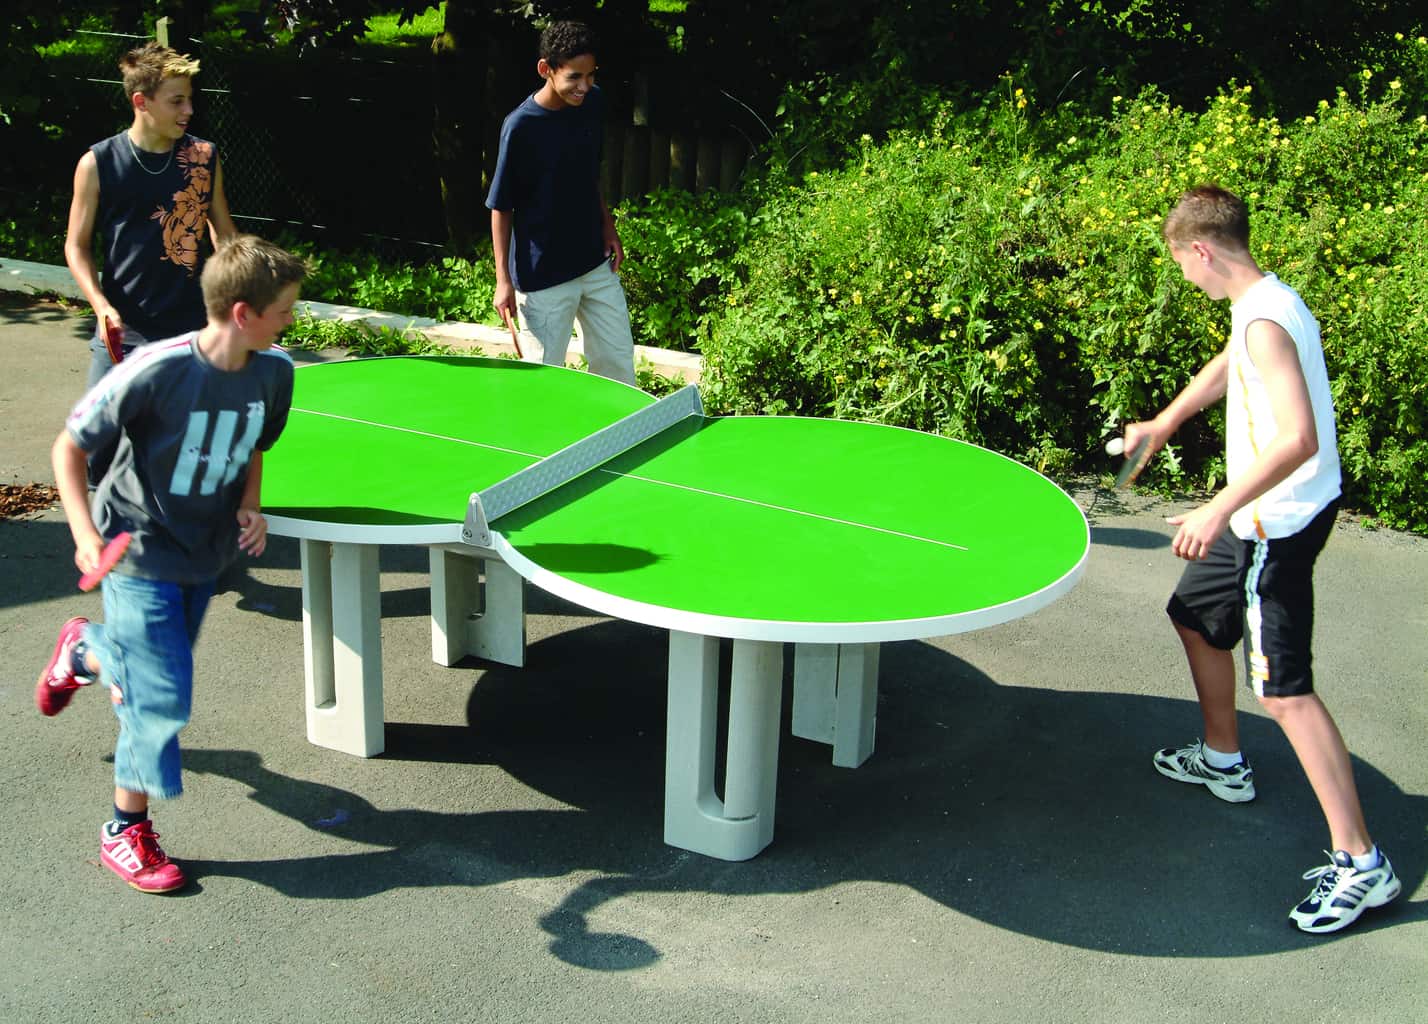 Butterfly Blue Figure 8 Concrete Table Tennis Table